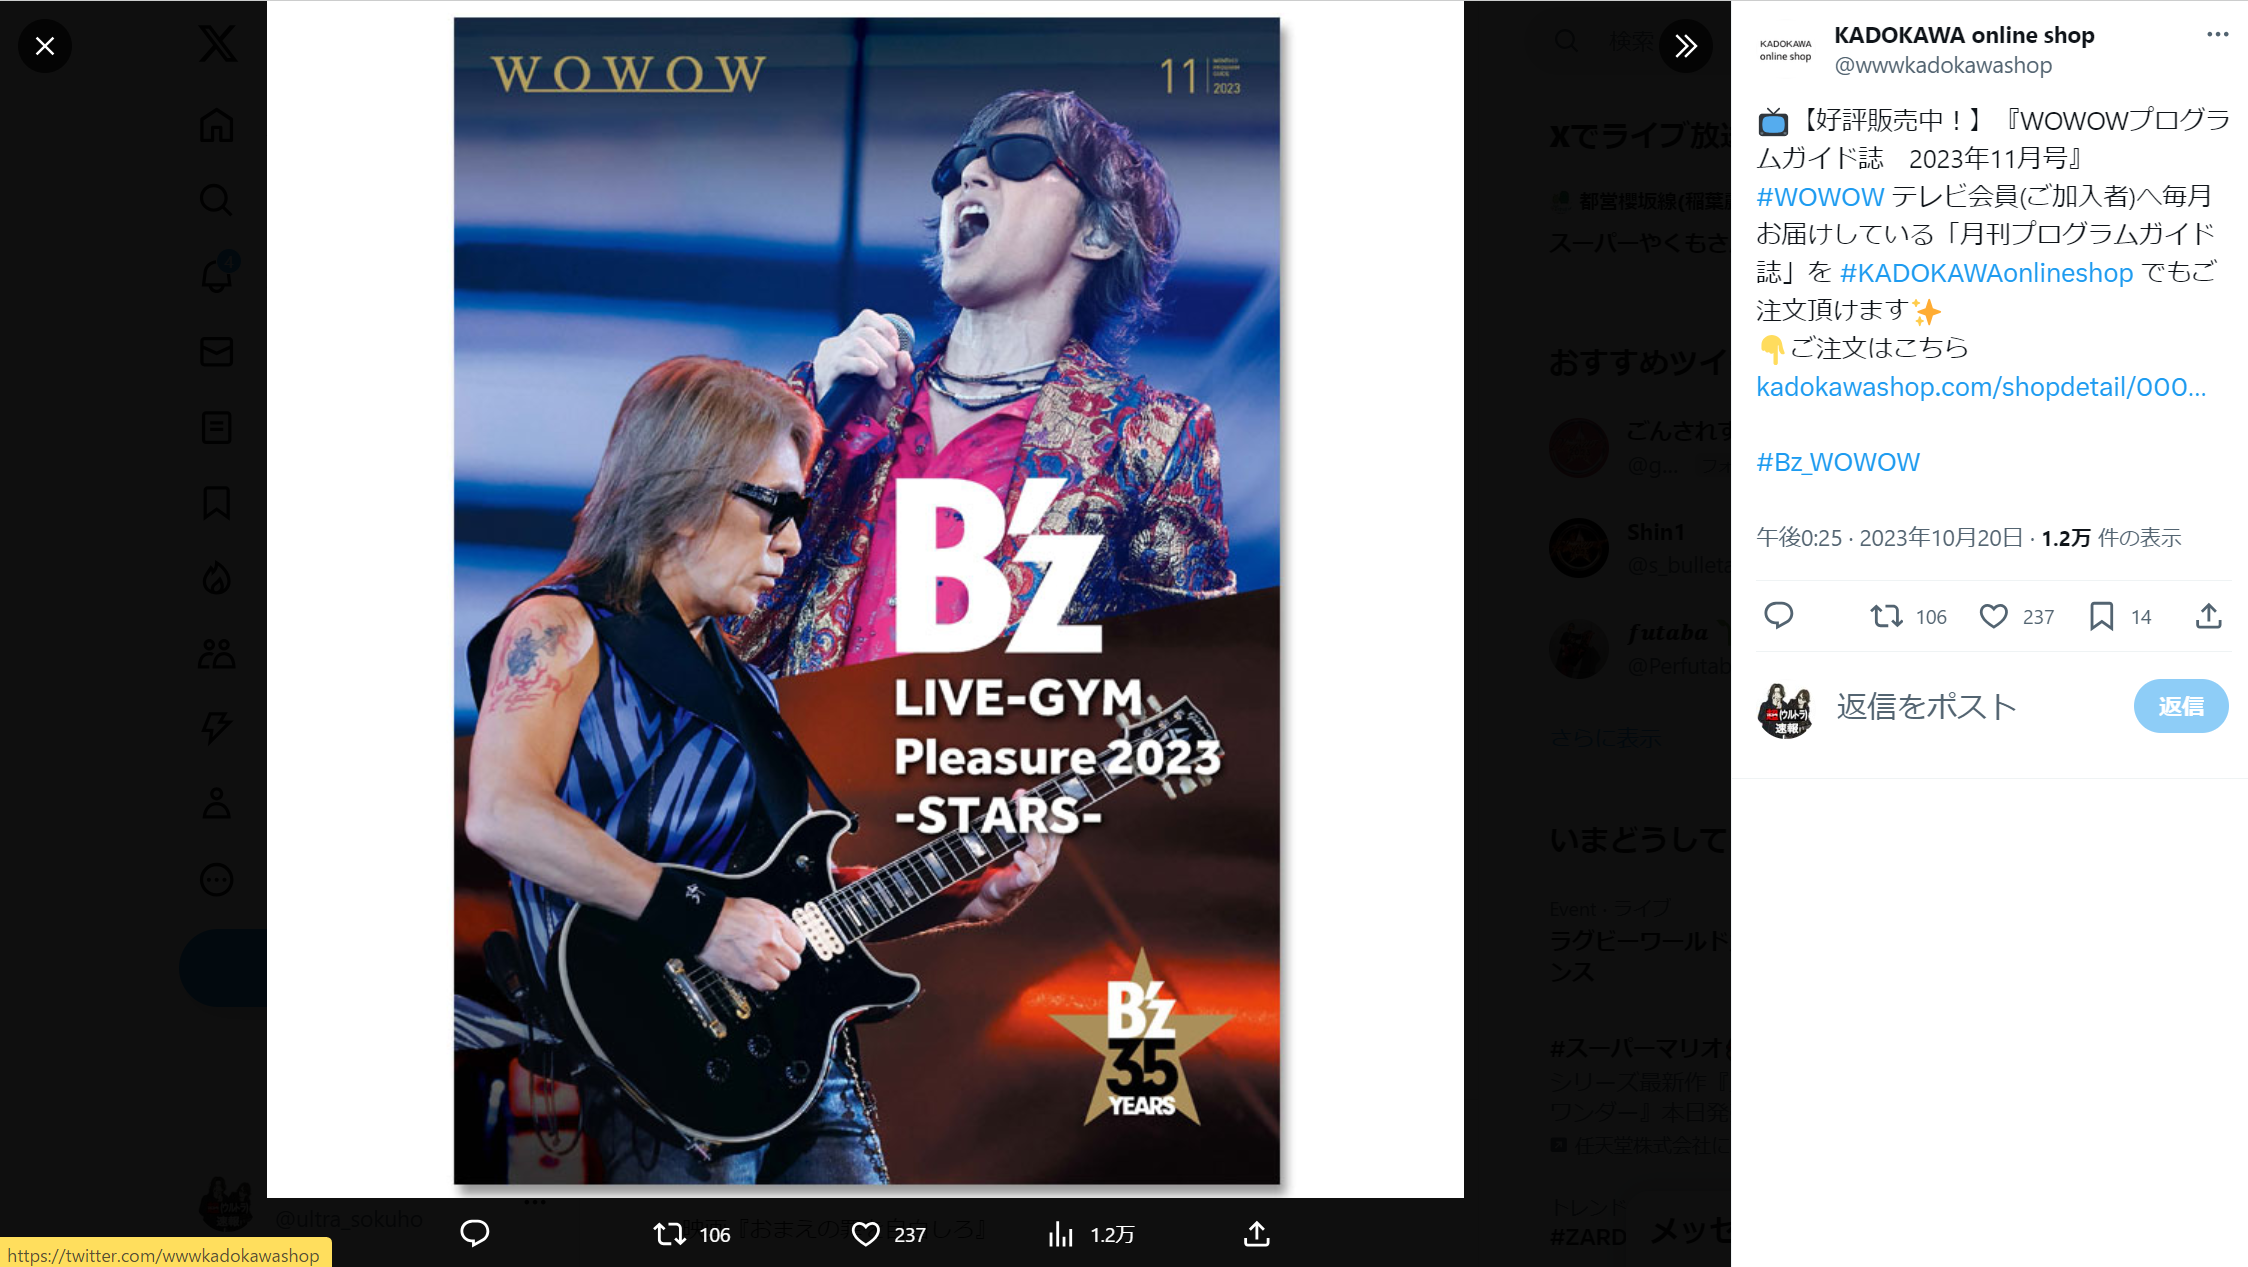 『WOWOWプログラムガイド誌 2023年11月号』のB'zの表紙イメージ